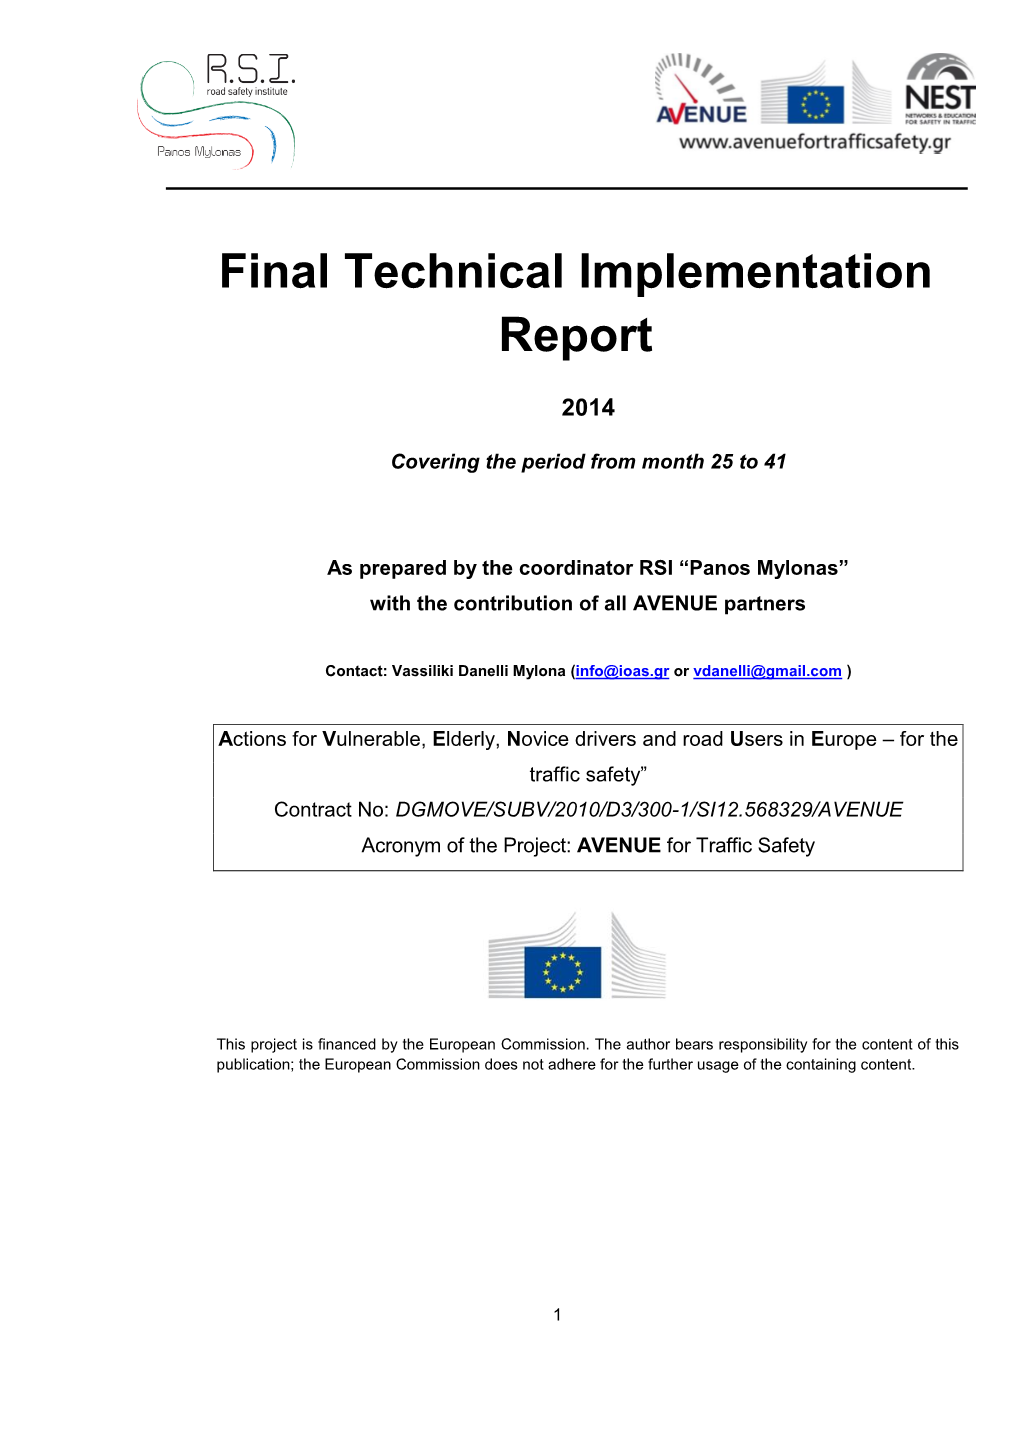 Final Technical Implementation Report